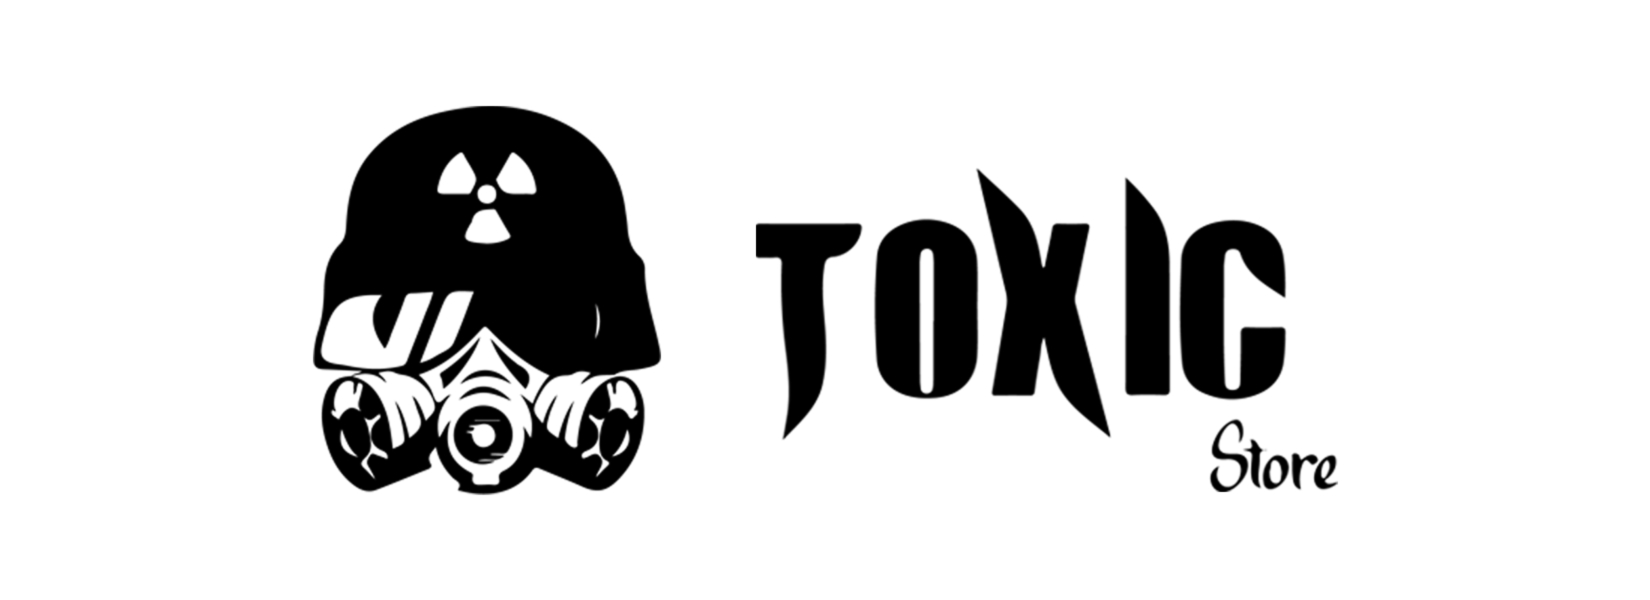 Showroom - Toxic Store